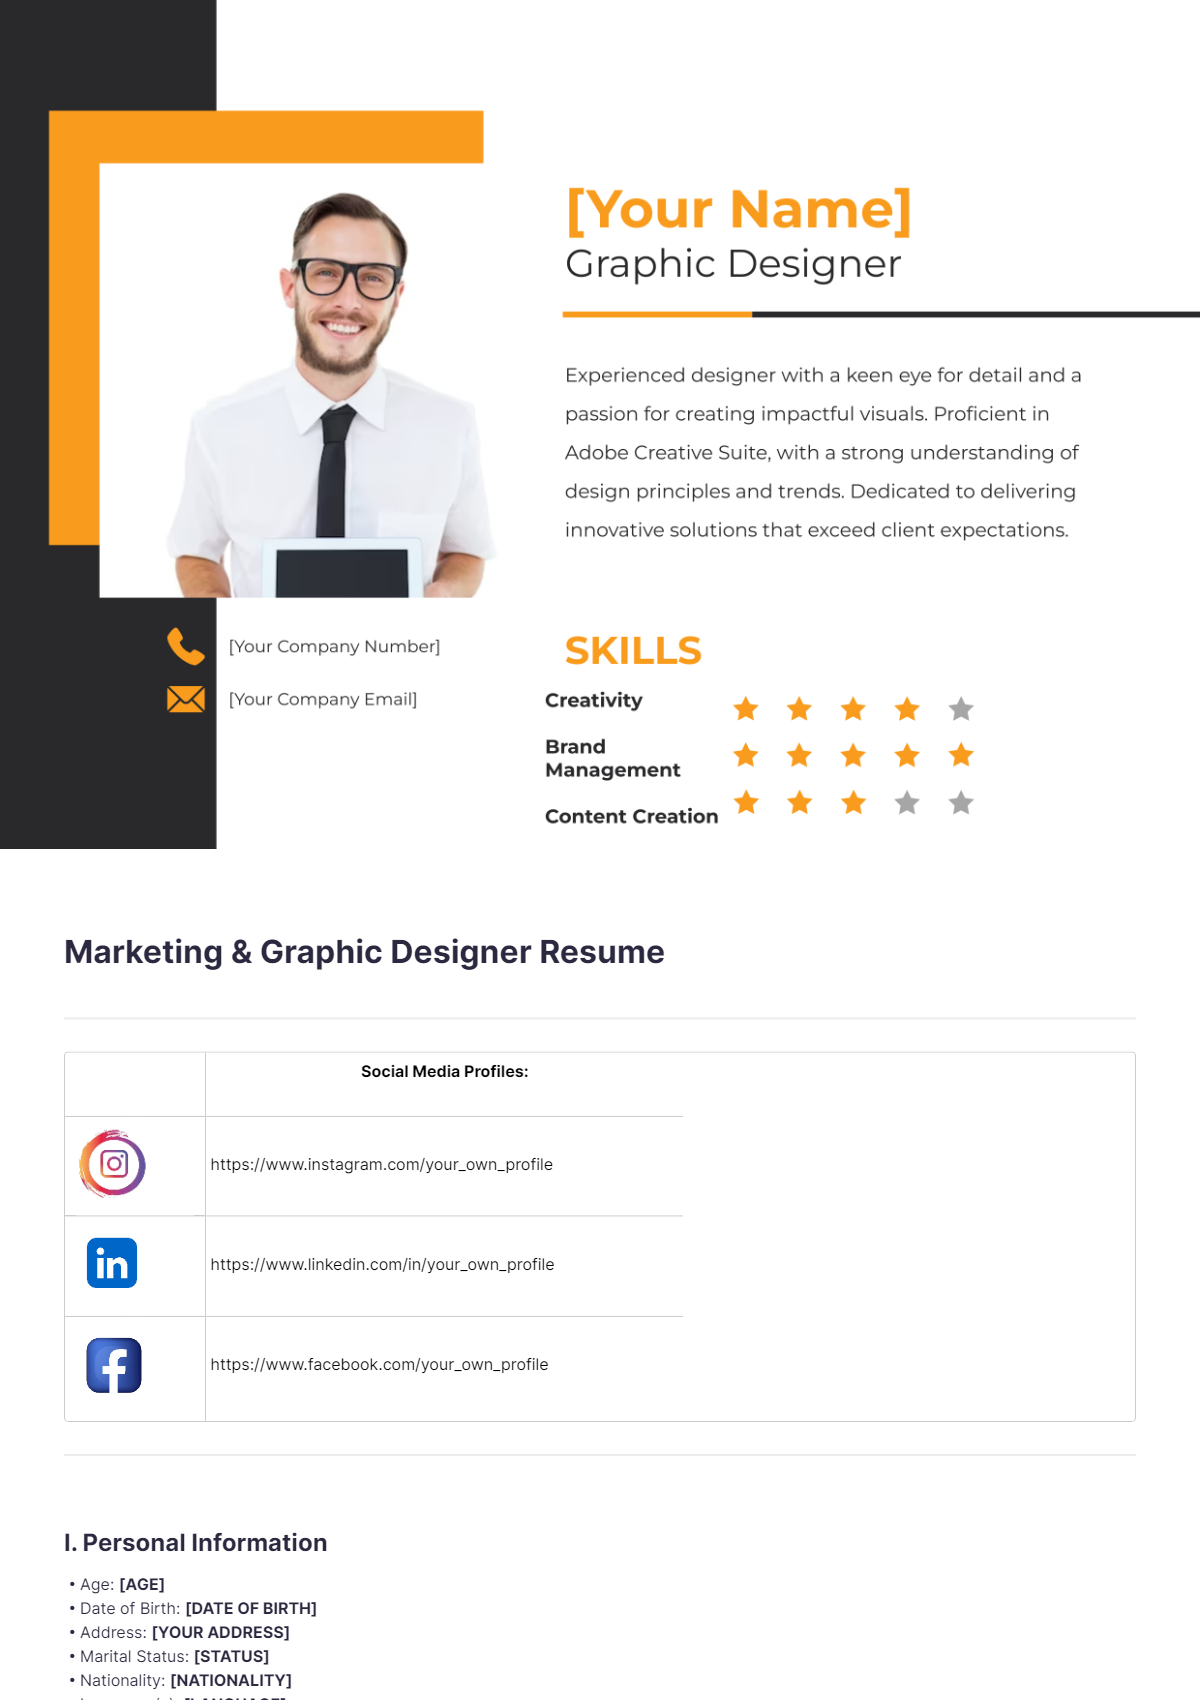 Free Marketing & Graphic Designer Resume